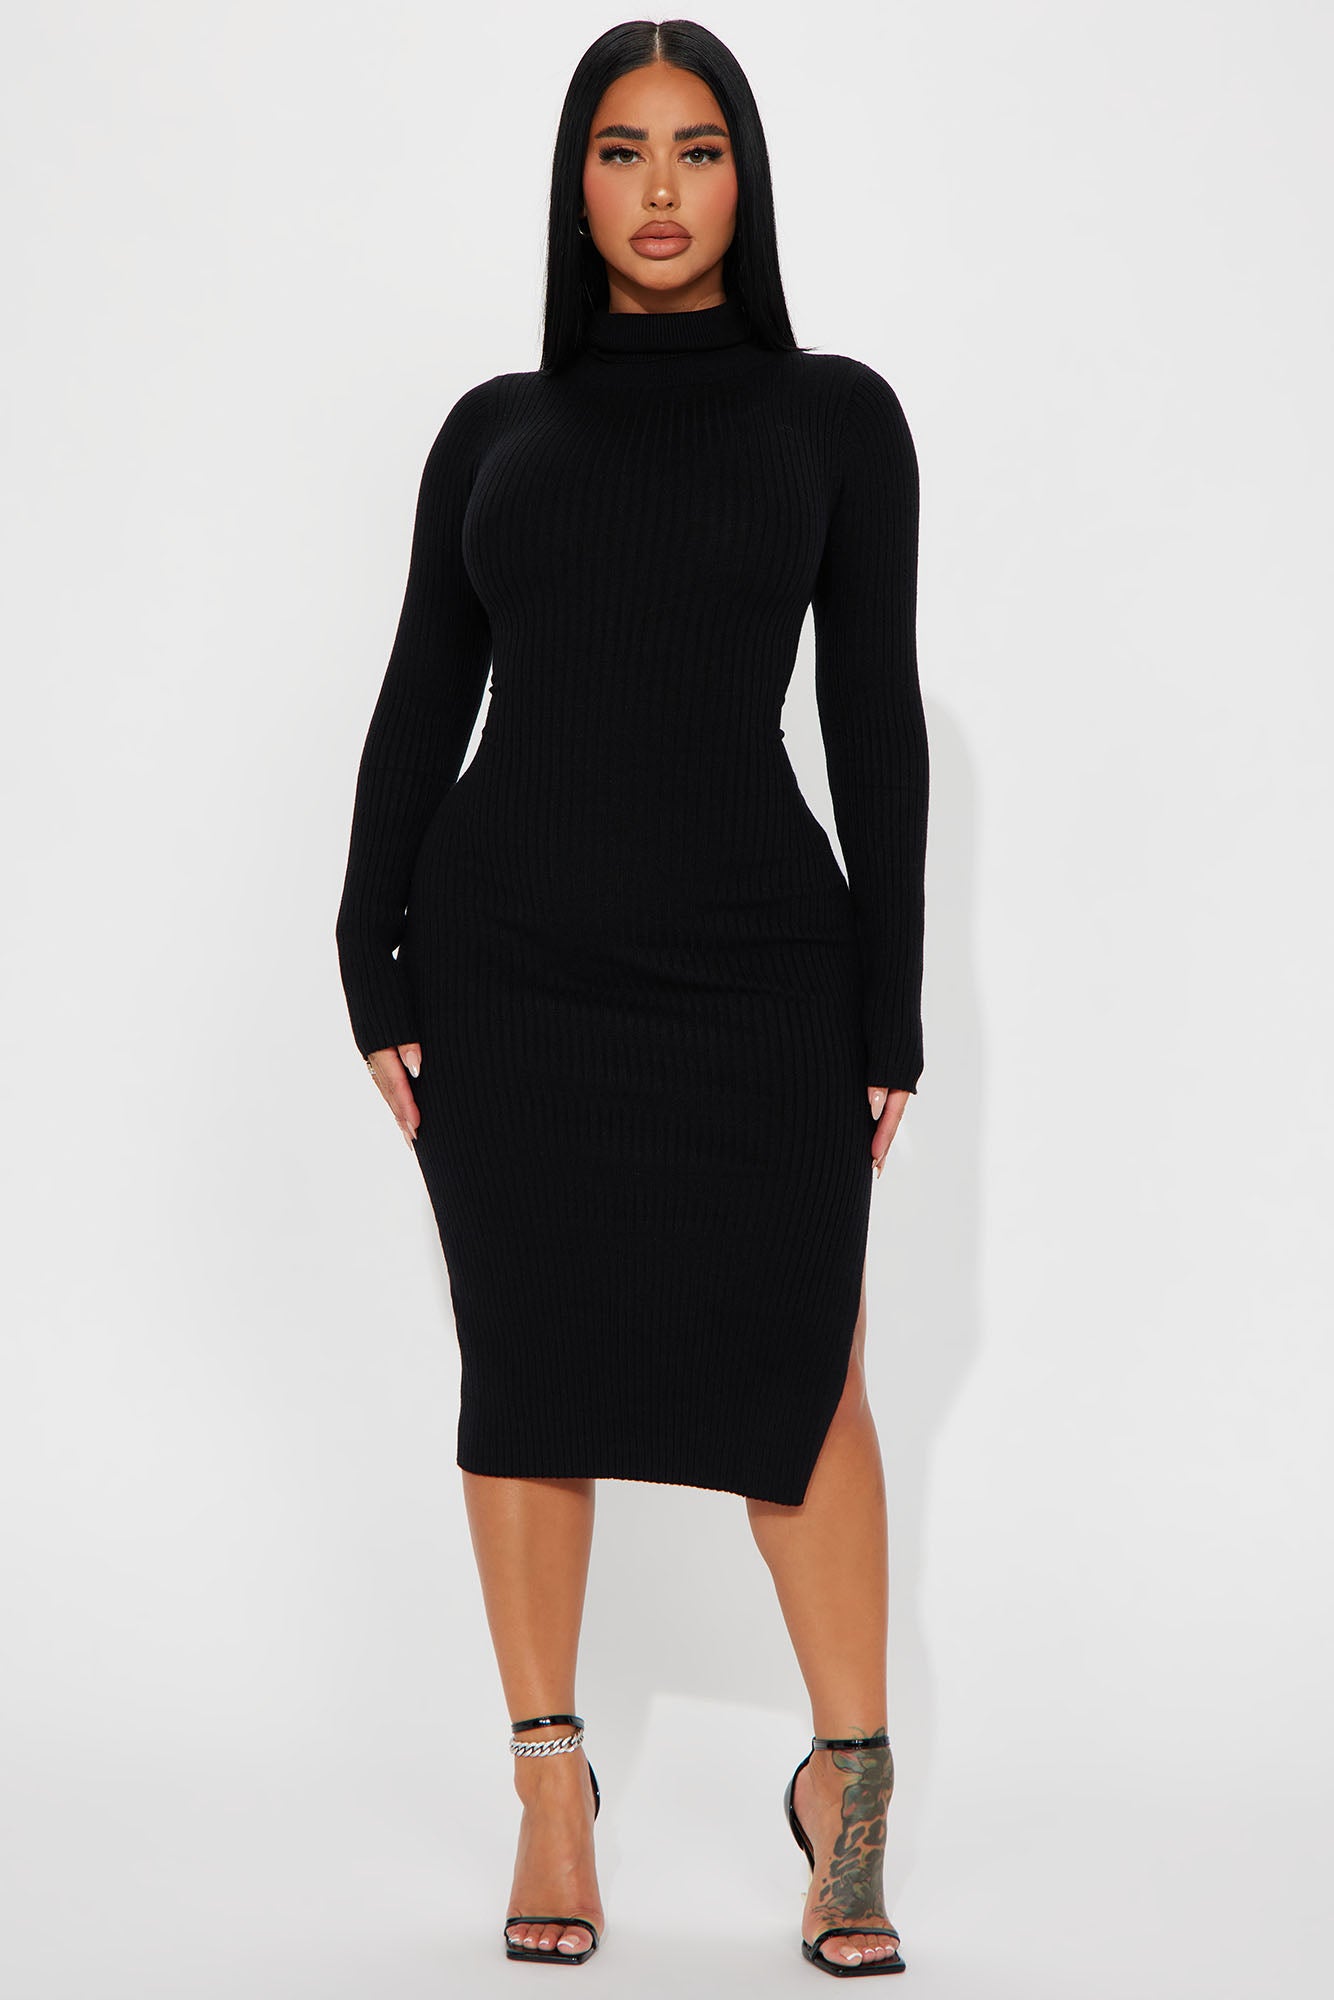 Fashion Nova 1X plus size black waist cinchin midi sweater dress NWT